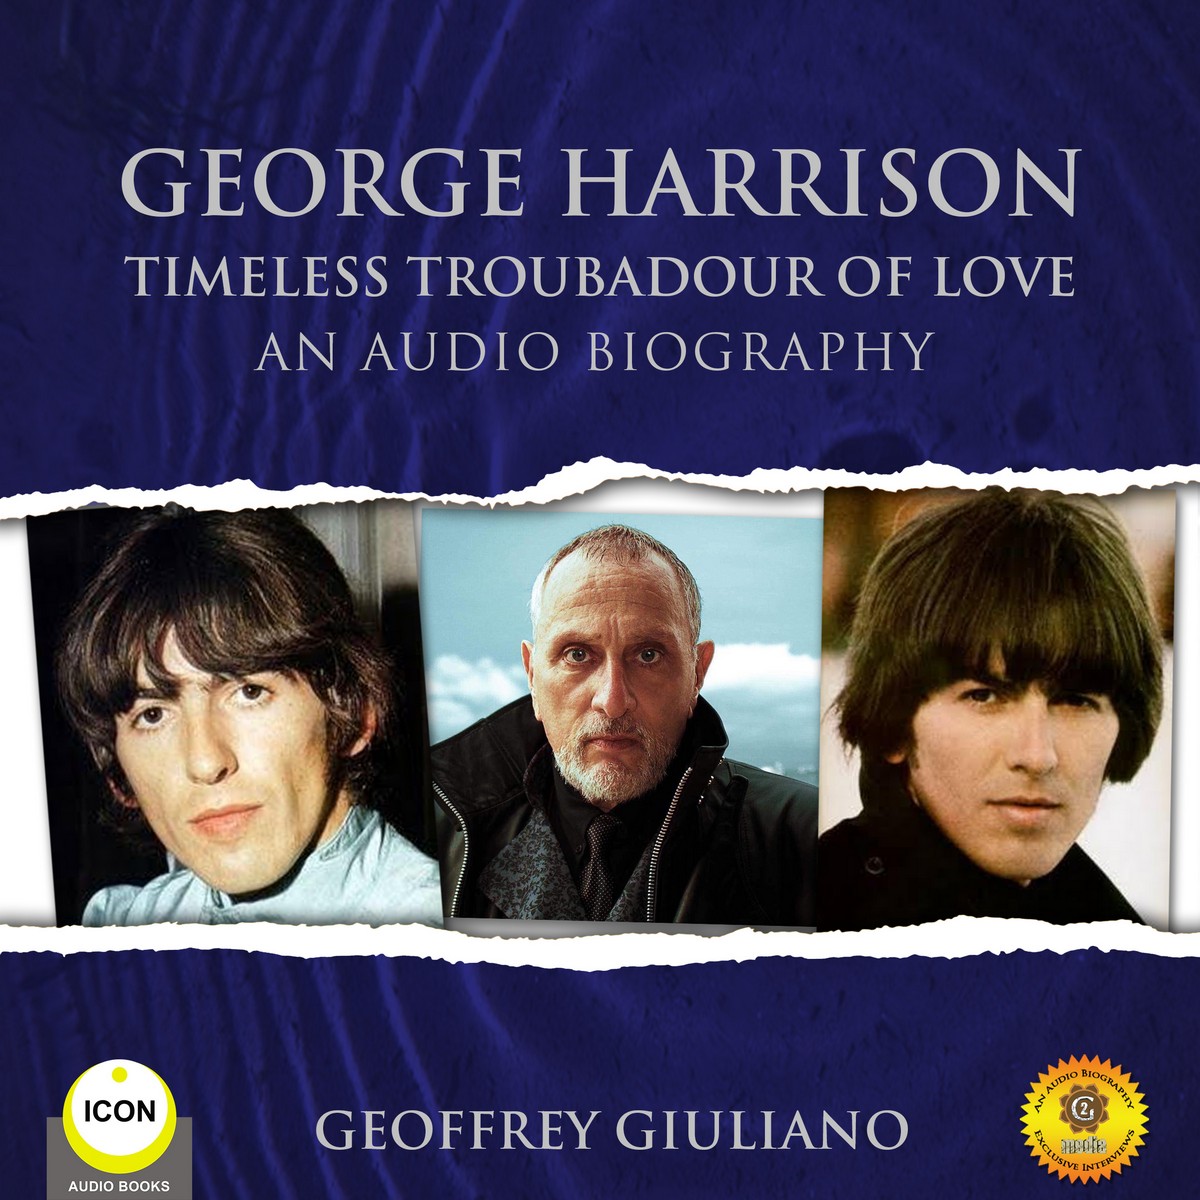 George Harrison Timeless Troubadour of Love – An Audio Biography